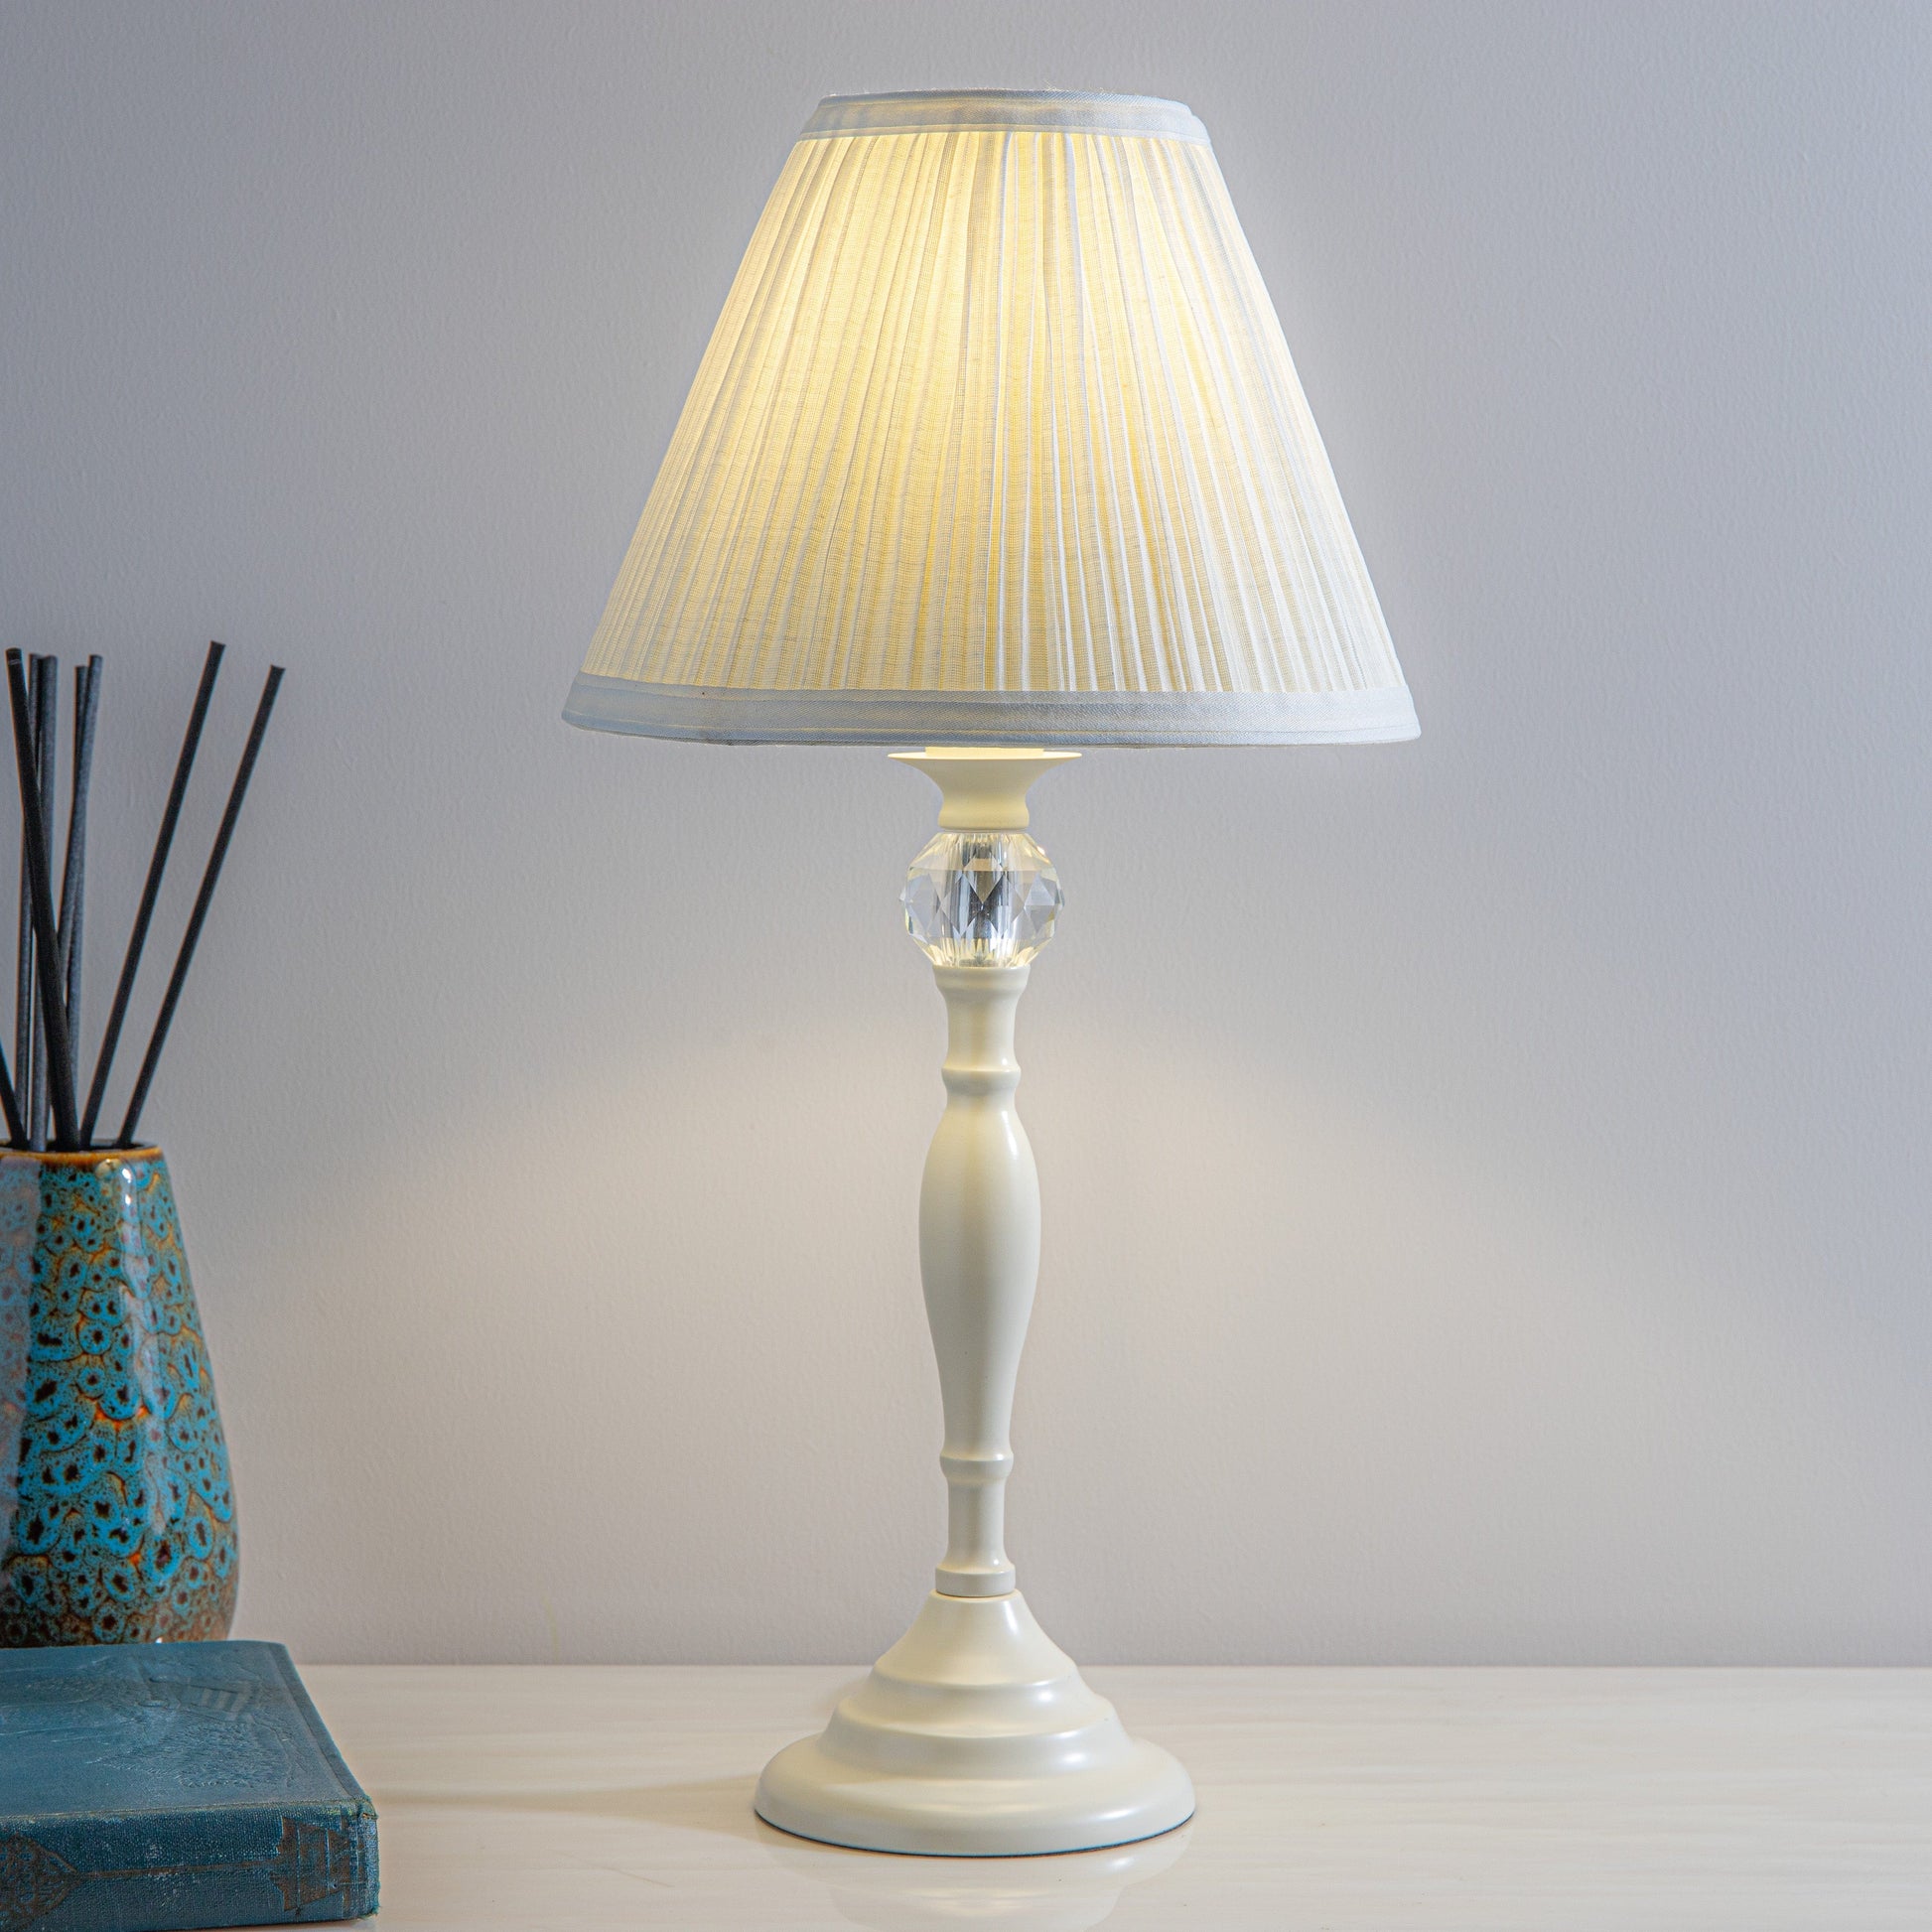 Lights  -  Laura Ashley Cream Ellis Table Lamp With Ivory Shade  -  60001627